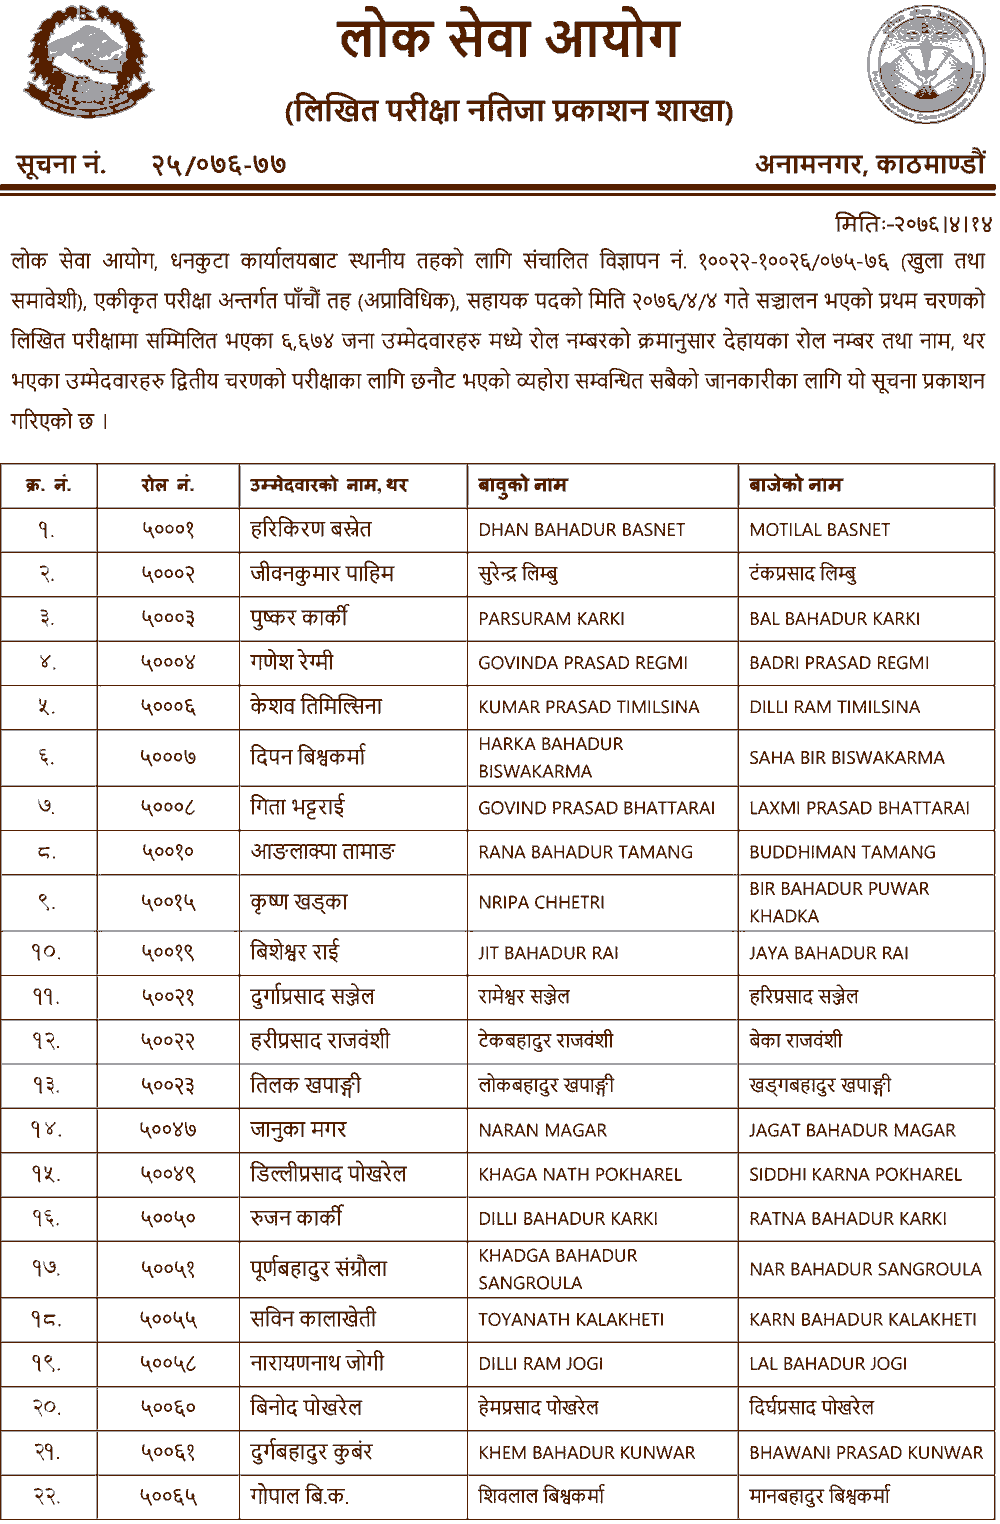 Local Level 5th Level Non-Technical Written Exam Result - Dhankuta